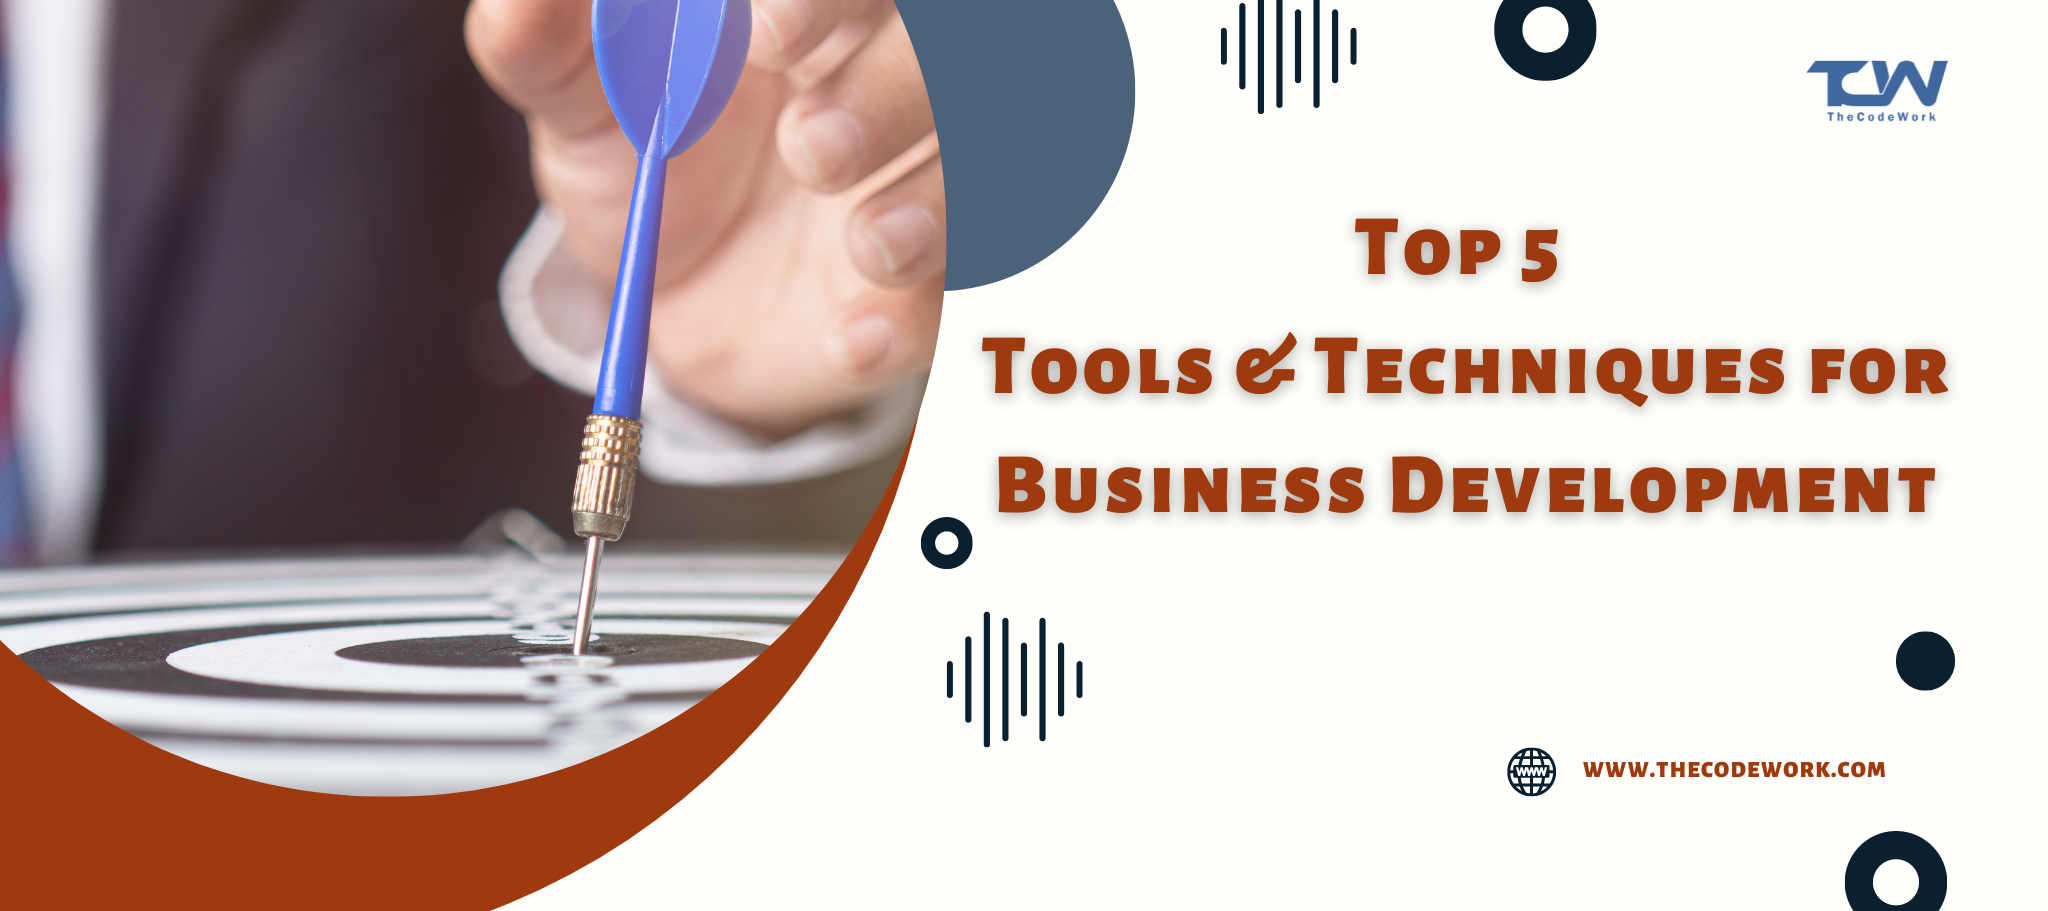 Top 5 Tools & Techniques for Business Development 